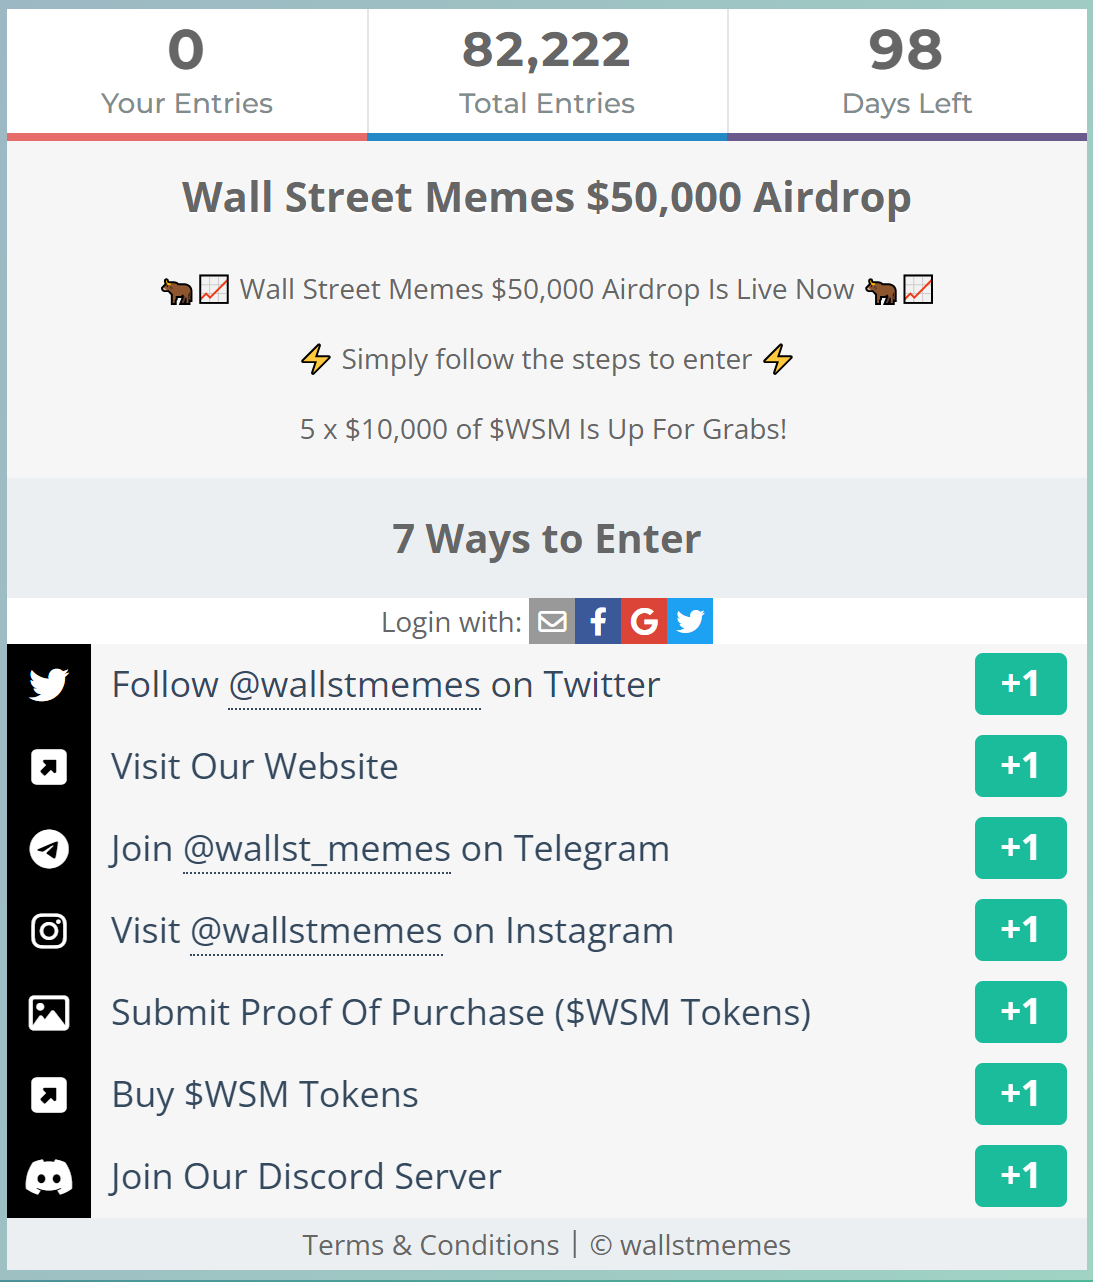 Wall Street Memes (WSM) Airdrop